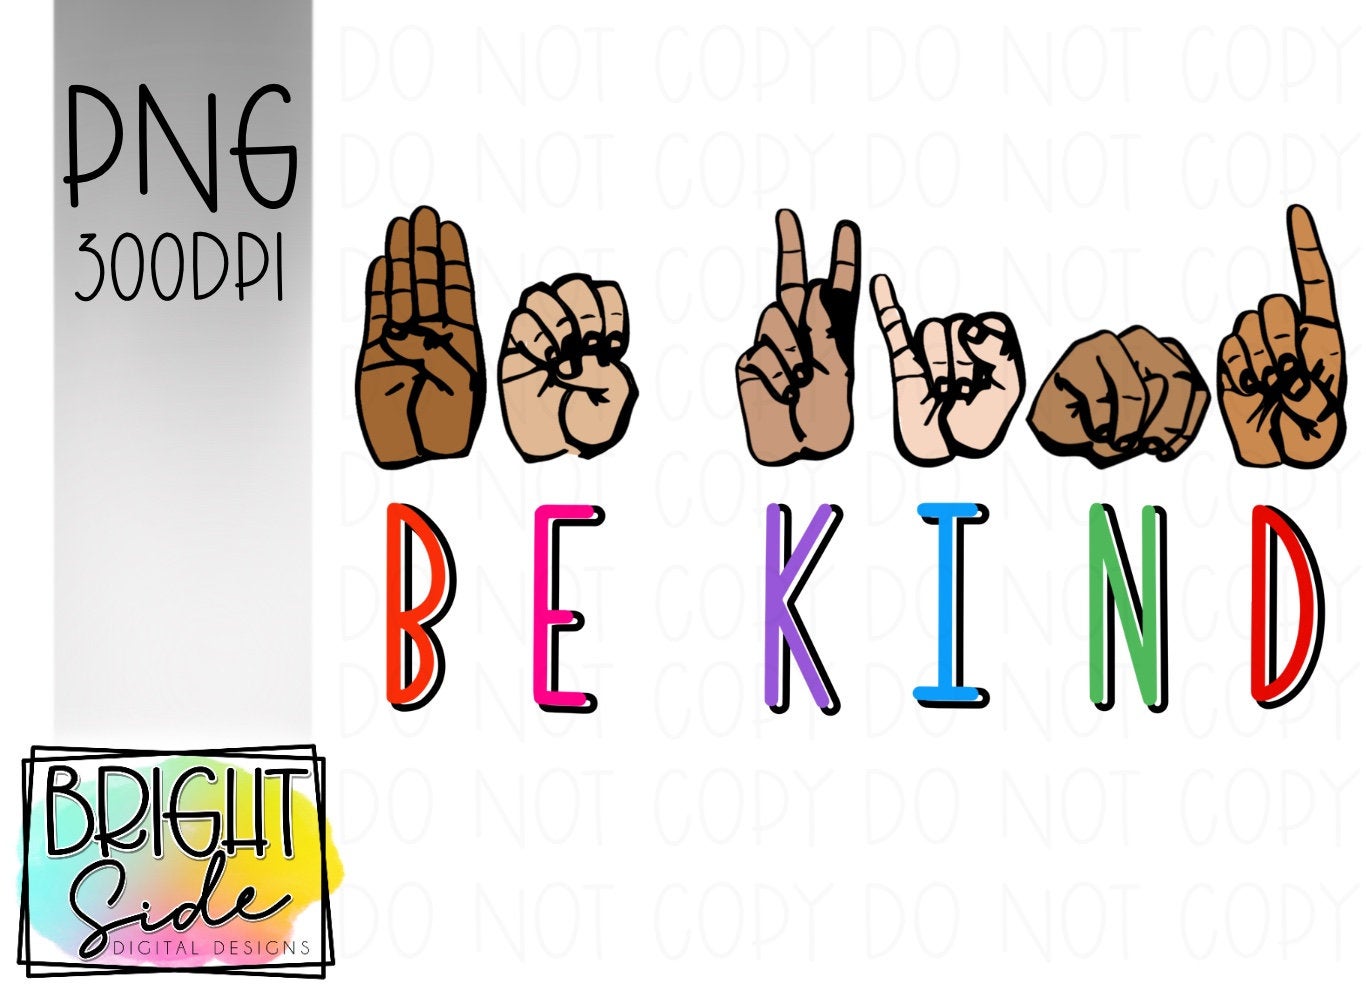 Be kind - sign language